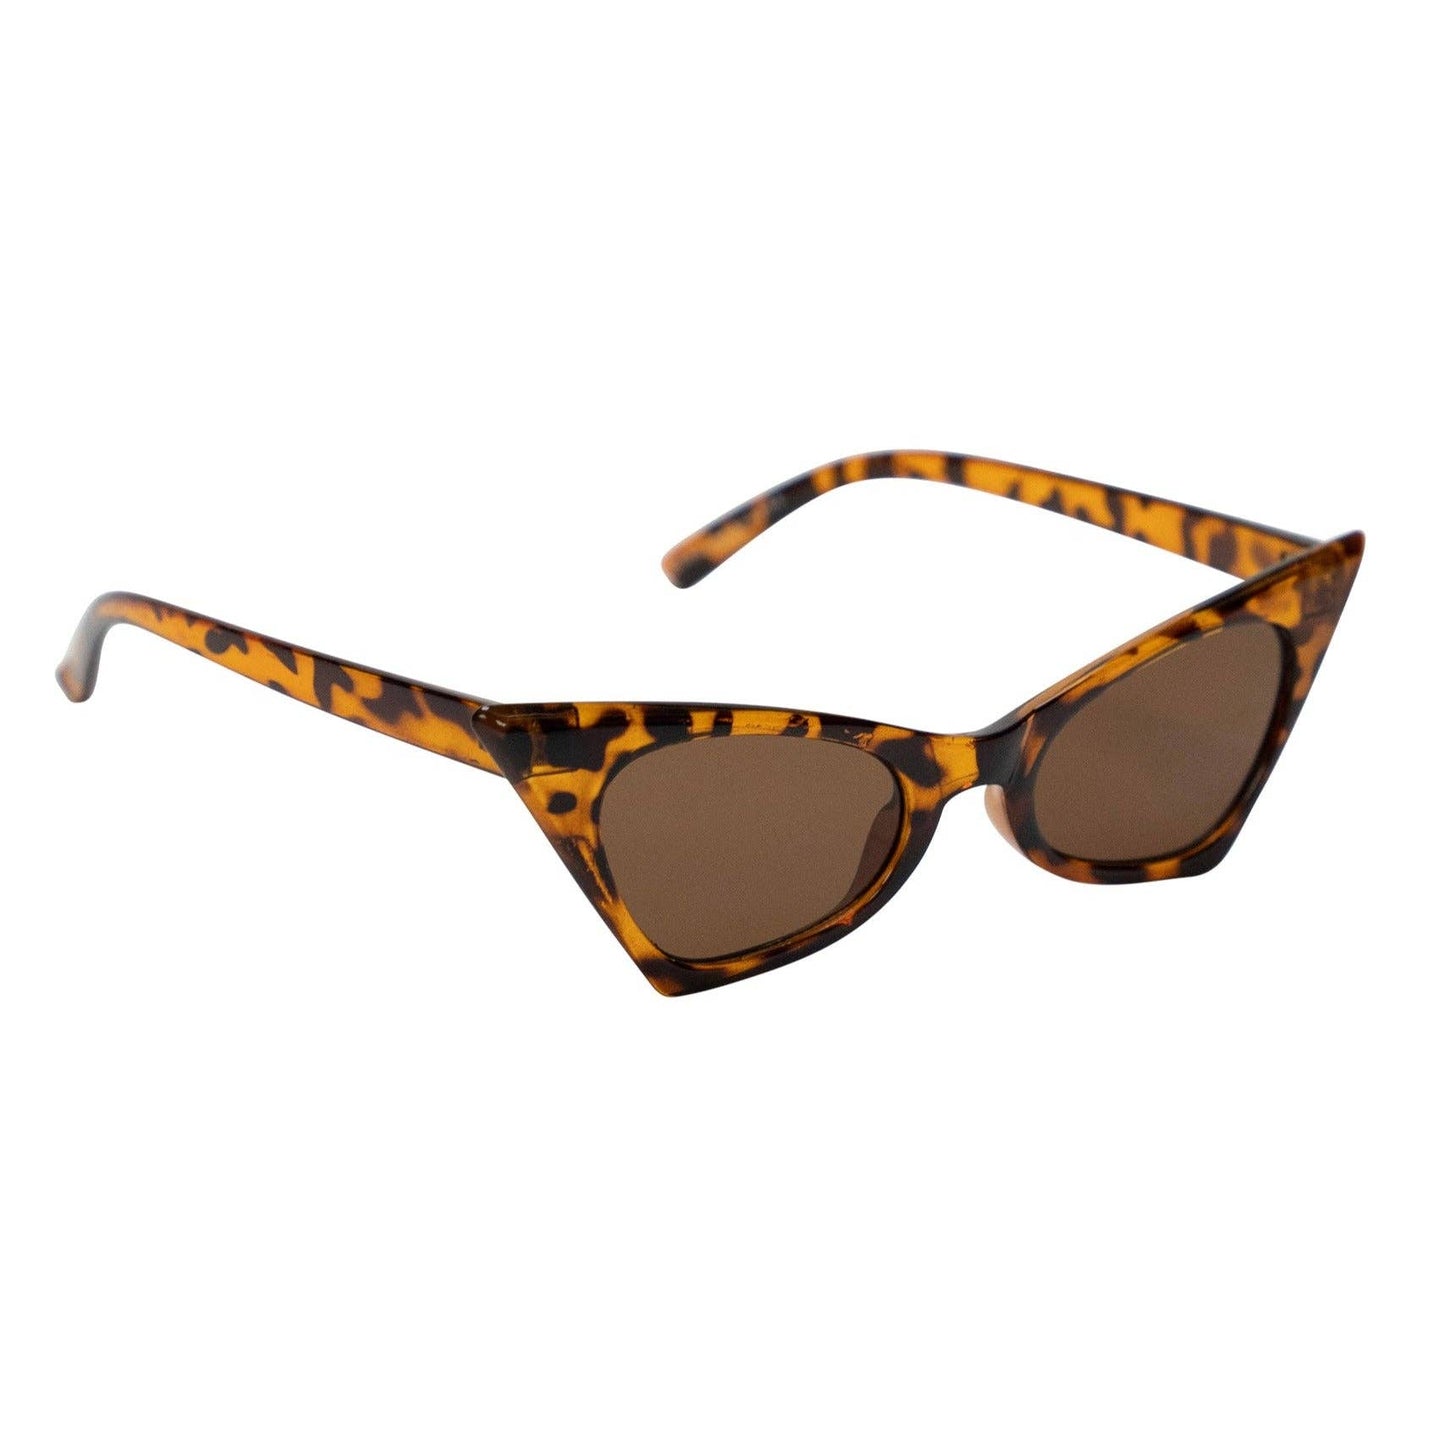 Pointed Cat Eye Sunglasses in Tortoiseshell